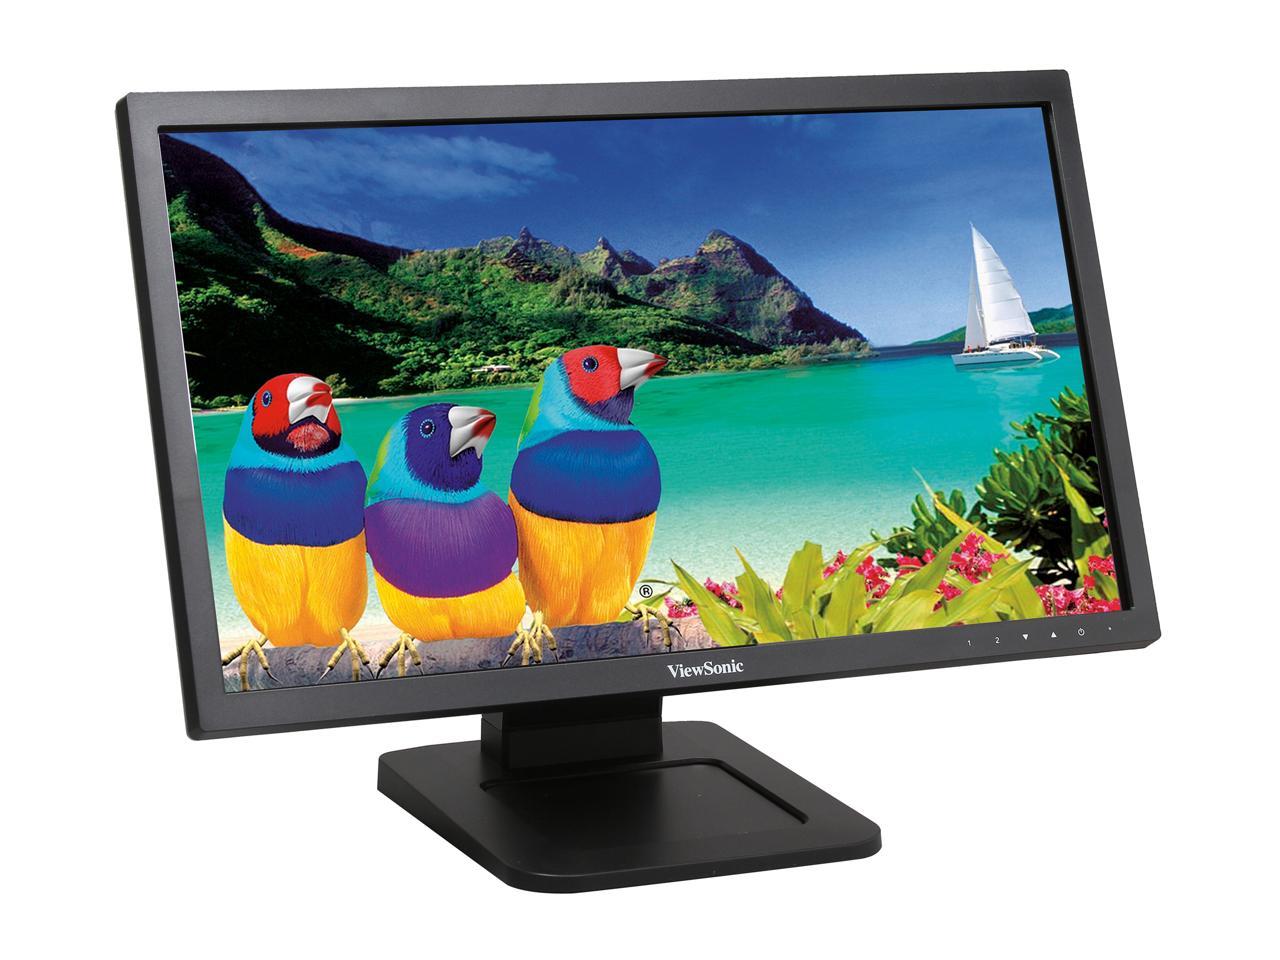 ViewSonic TD2220 22" Full HD 1920 x 1080 VGA DVI-D Built-in Speakers Backlit LED Optical Touchscreen Monitor